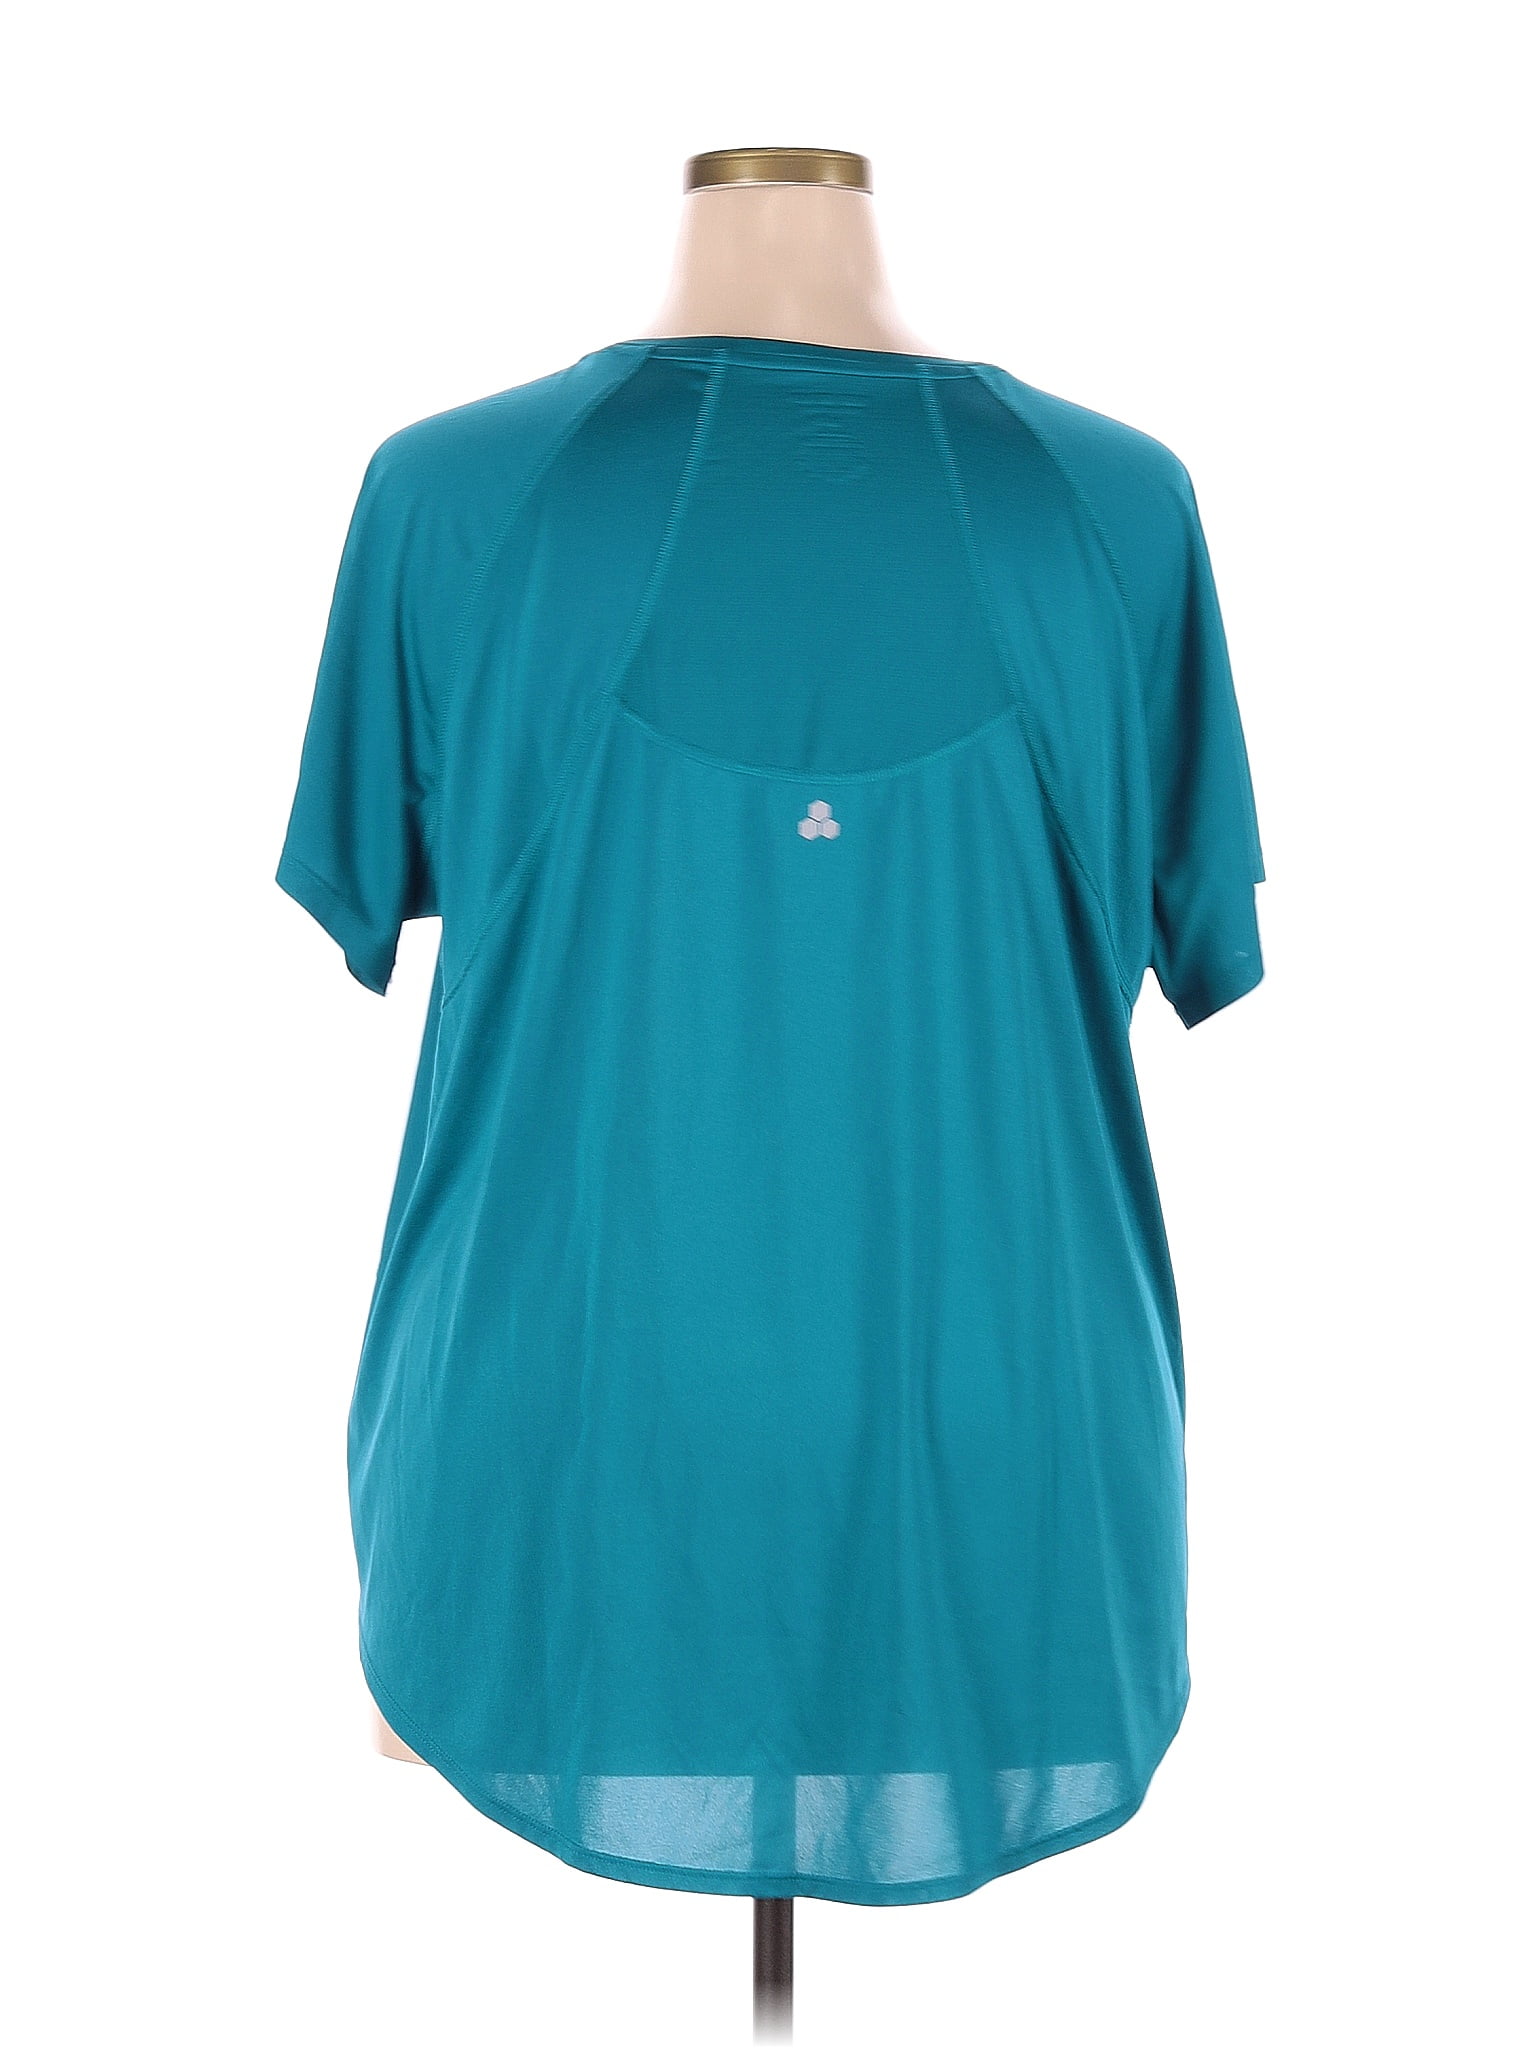 Tek Gear Color Block Teal Short Sleeve T-Shirt Size 3X (Plus) - 42